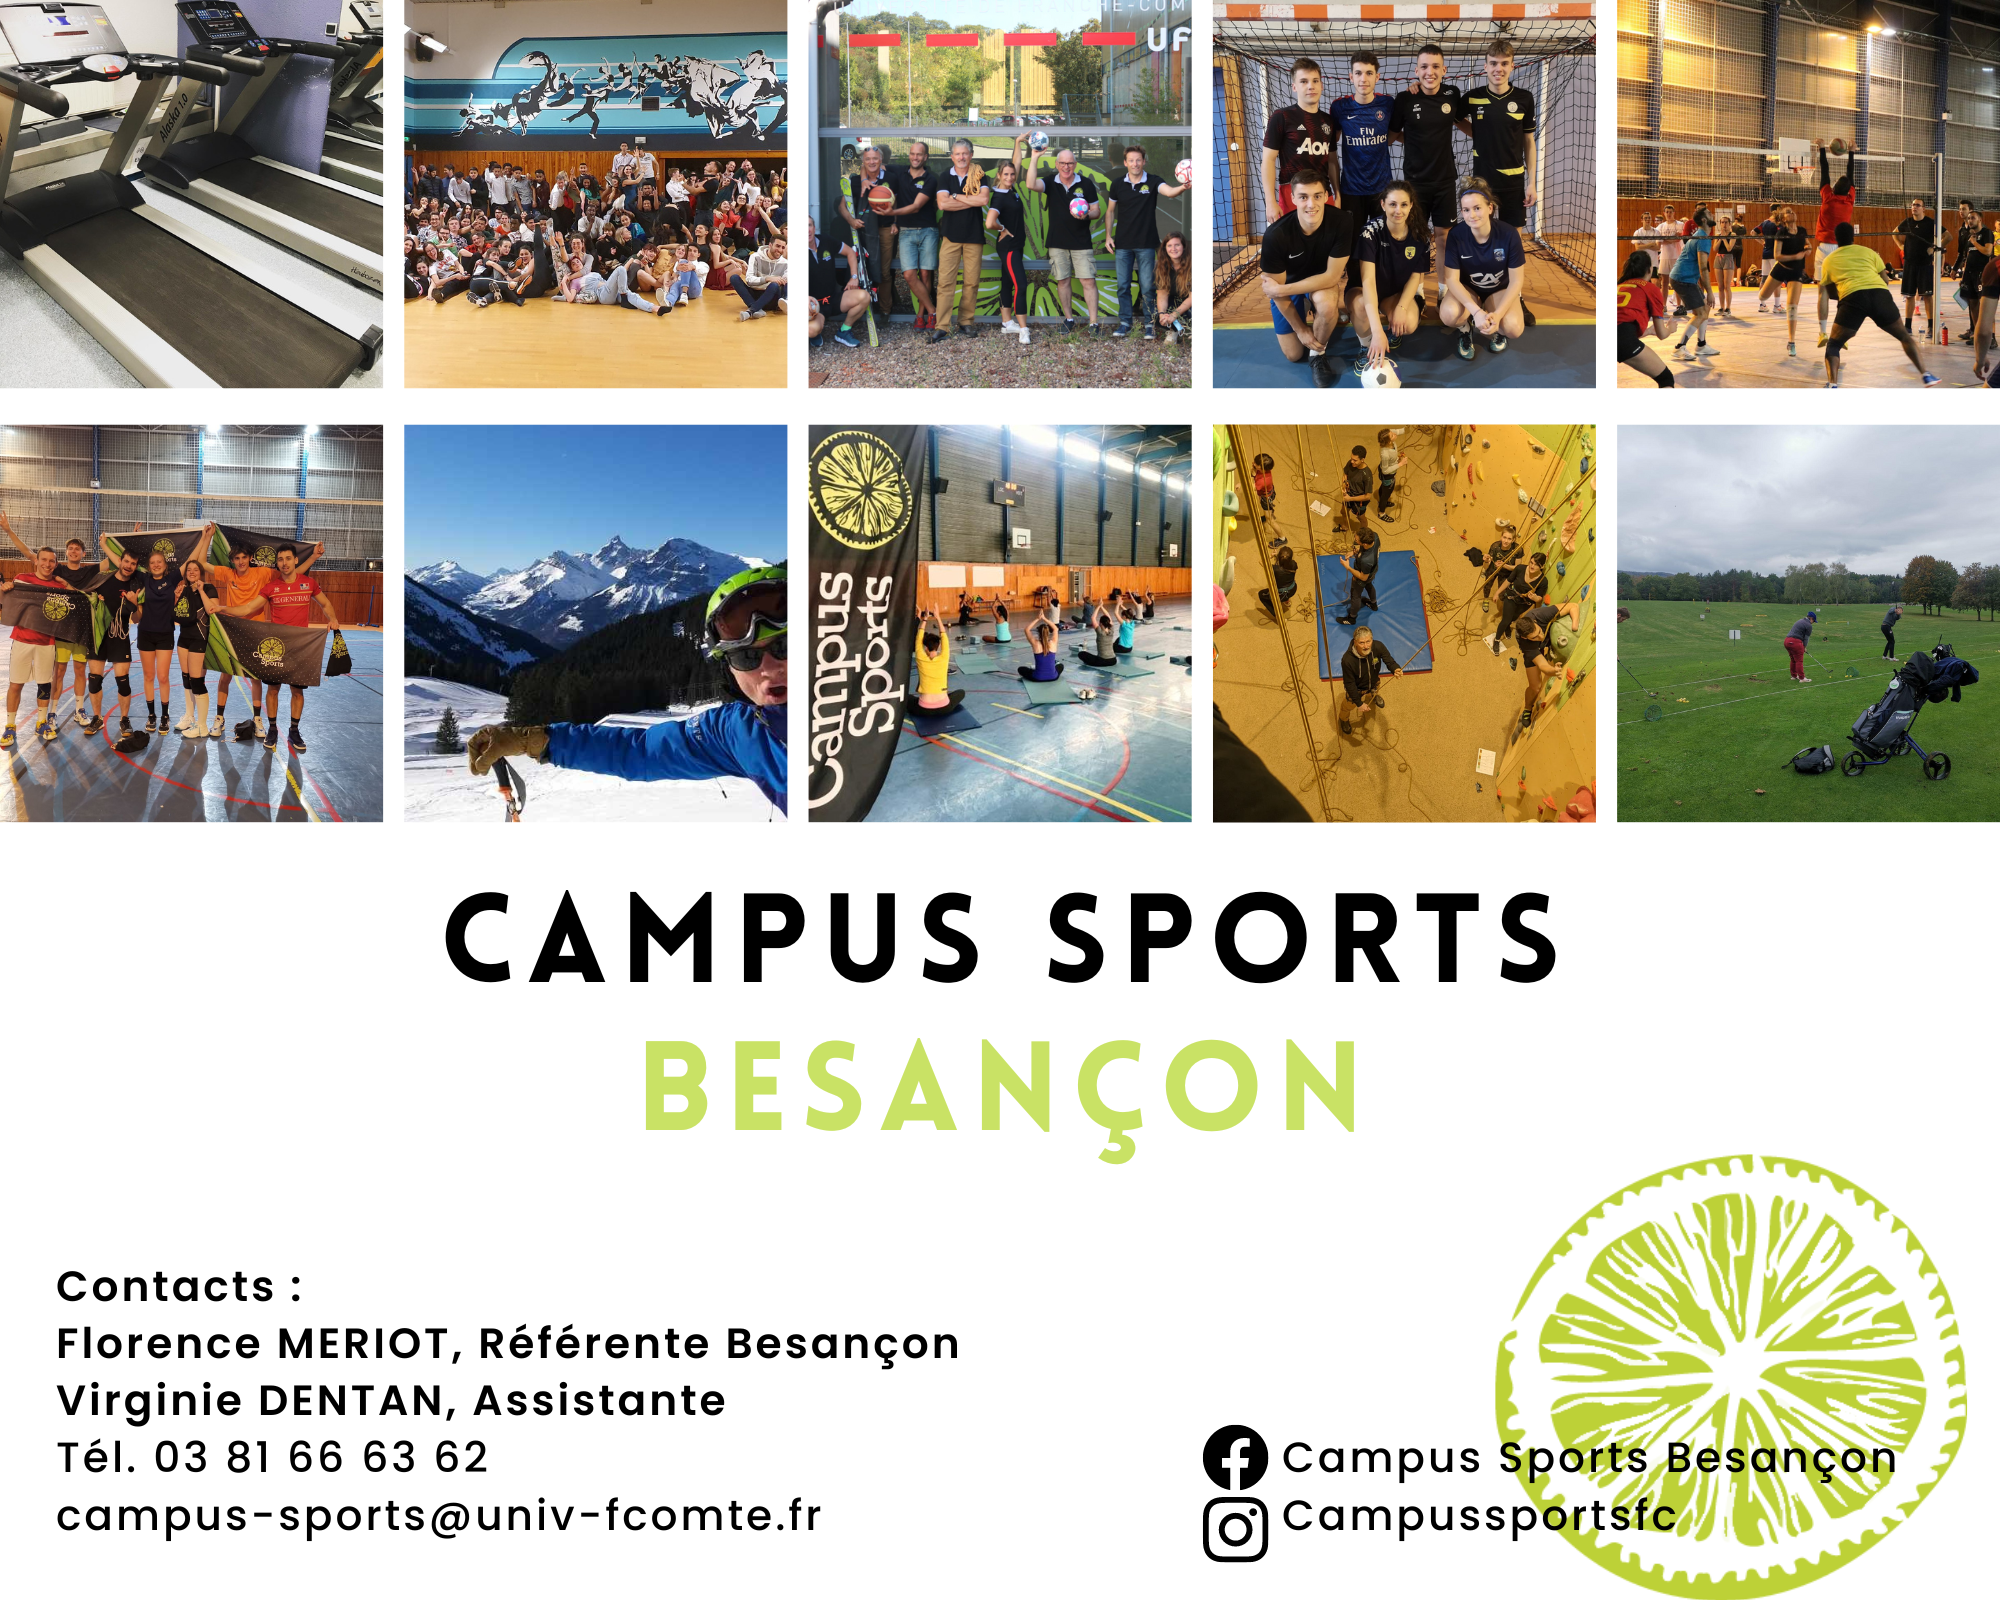 Campus Sports Besançon